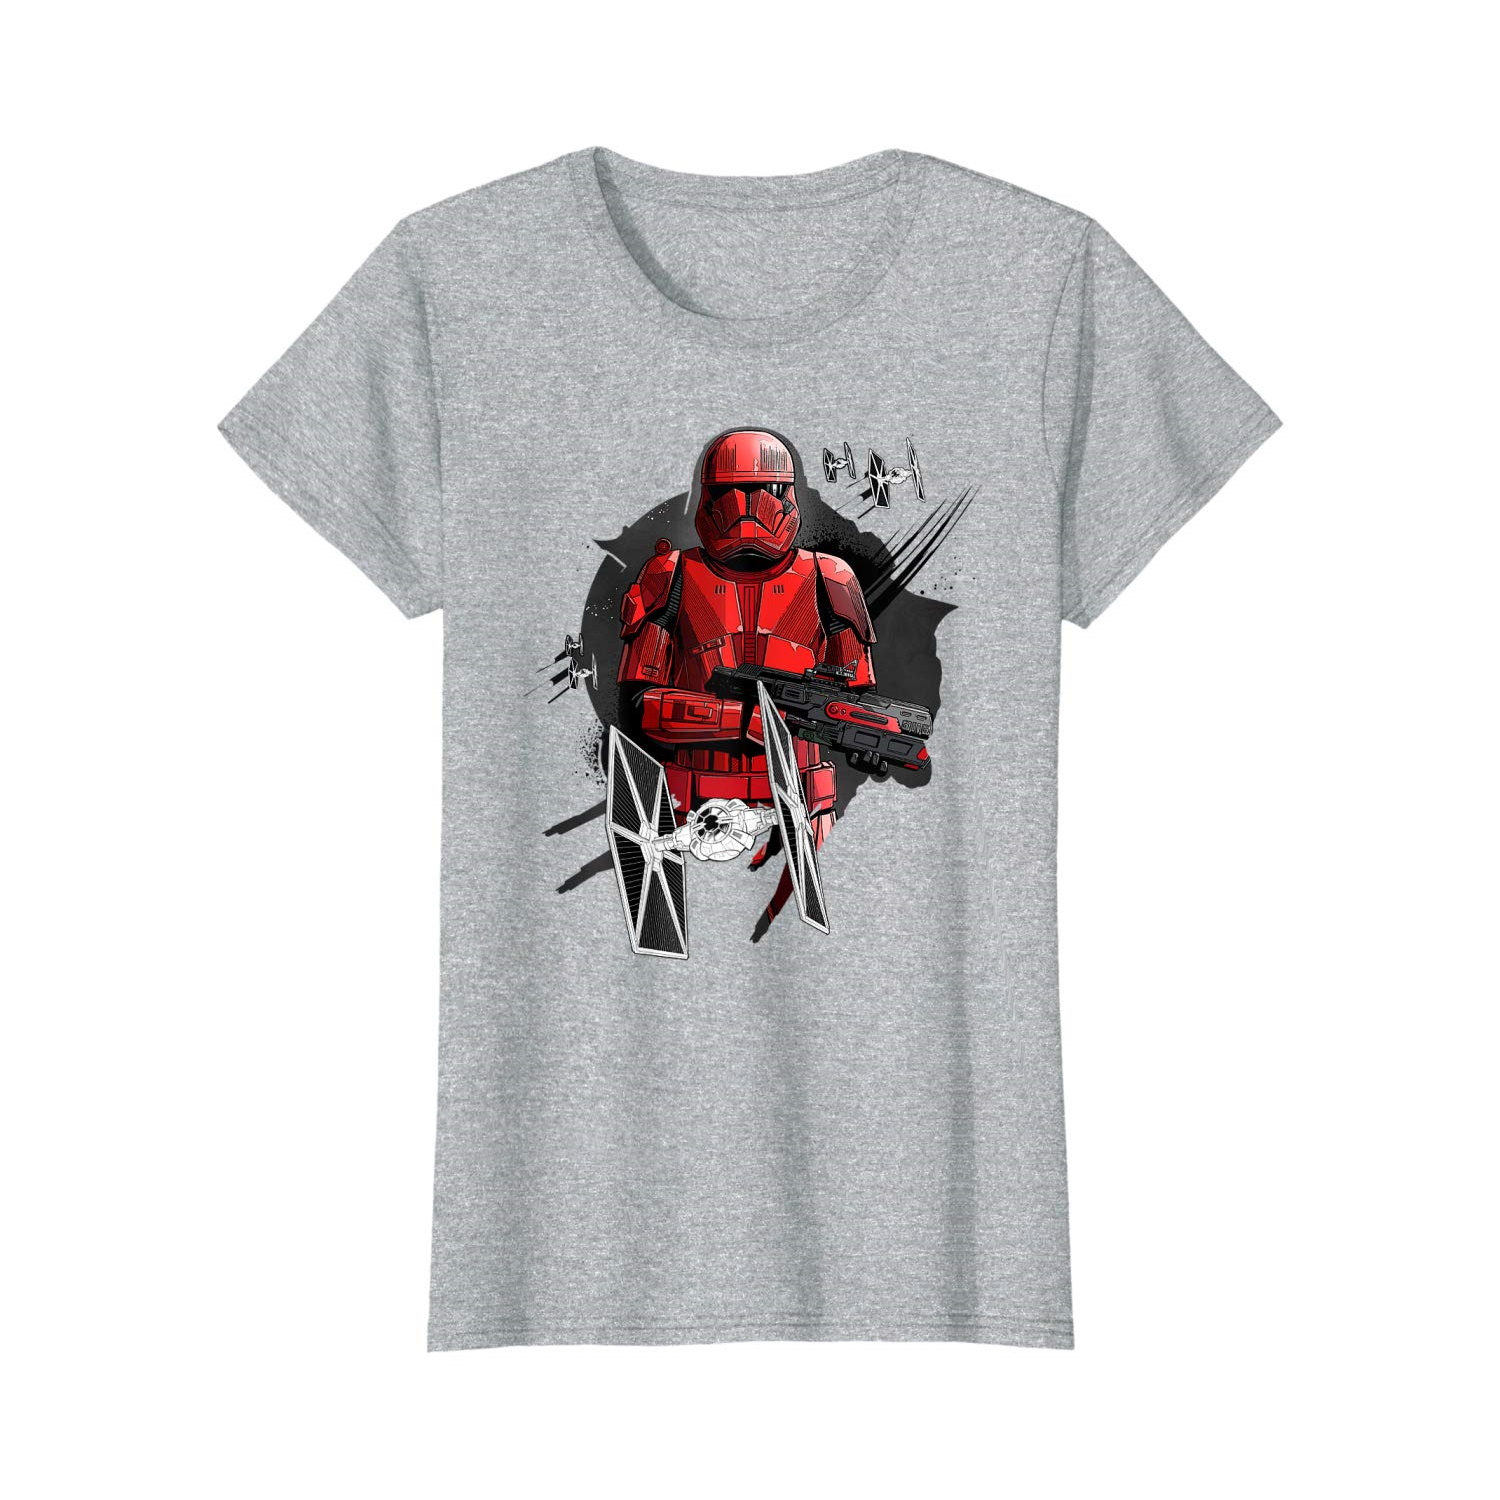 Women's Star Wars The Rise Of Skywalker Sith Trooper T-Shirt on Amazon